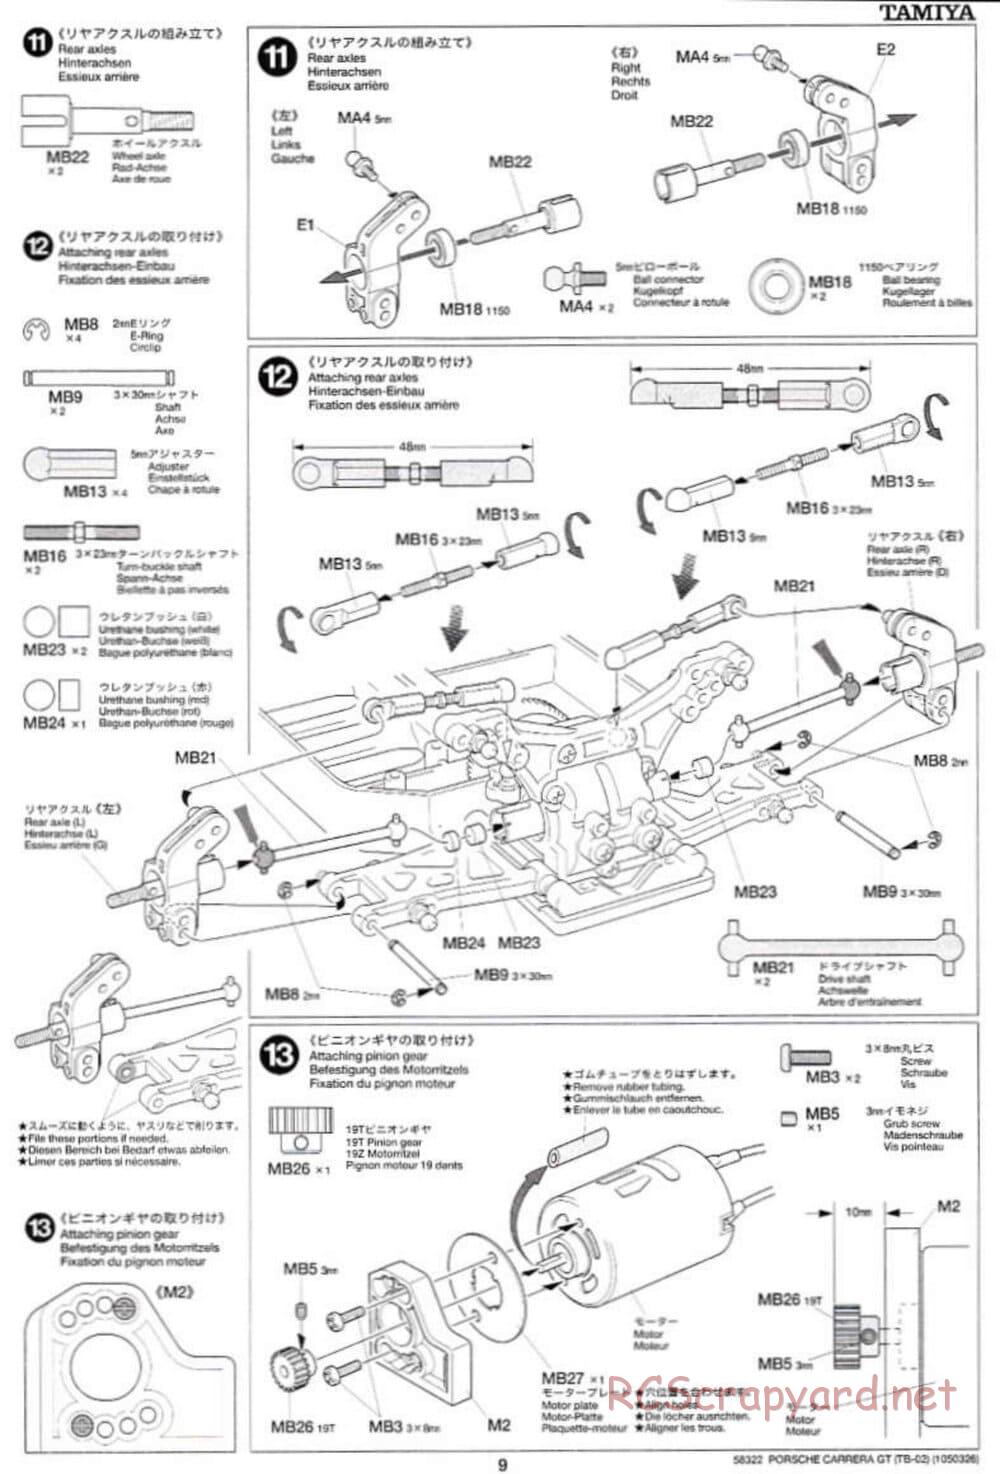 Tamiya - Porsche Carrera GT - TB-02 Chassis - Manual - Page 9